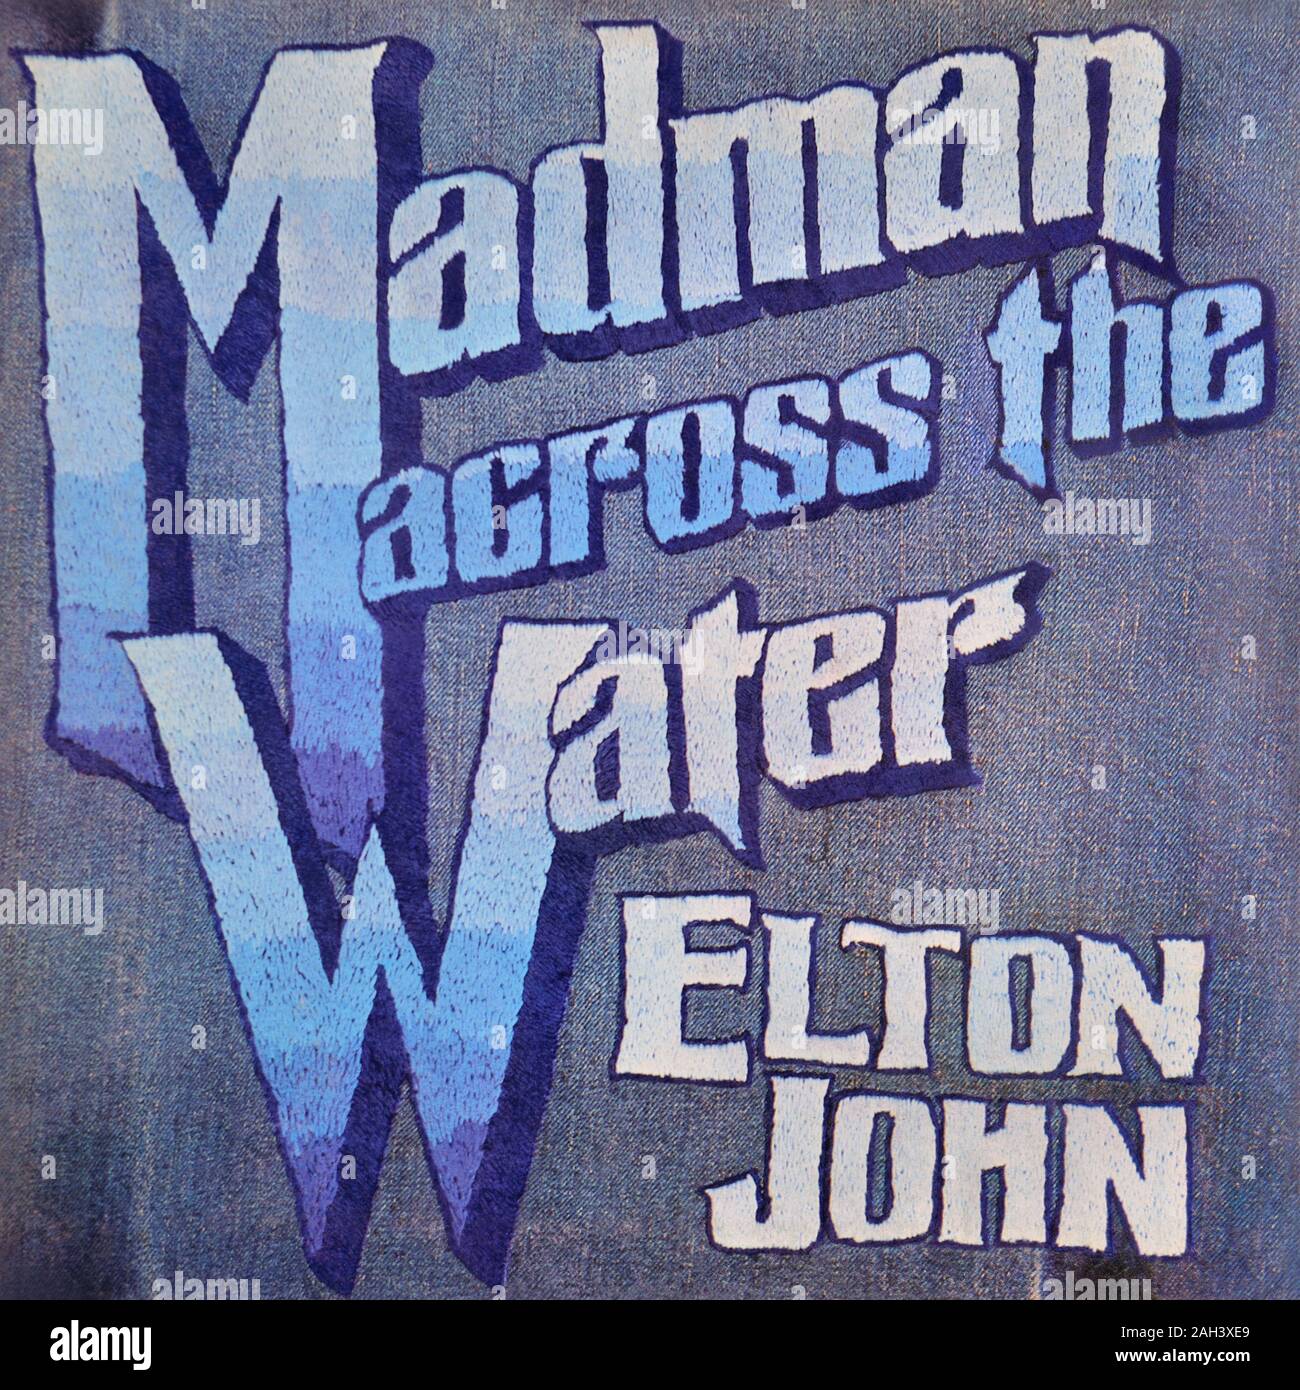 Elton John - copertina originale dell'album in vinile - Madman Across the Water - 1971 Foto Stock